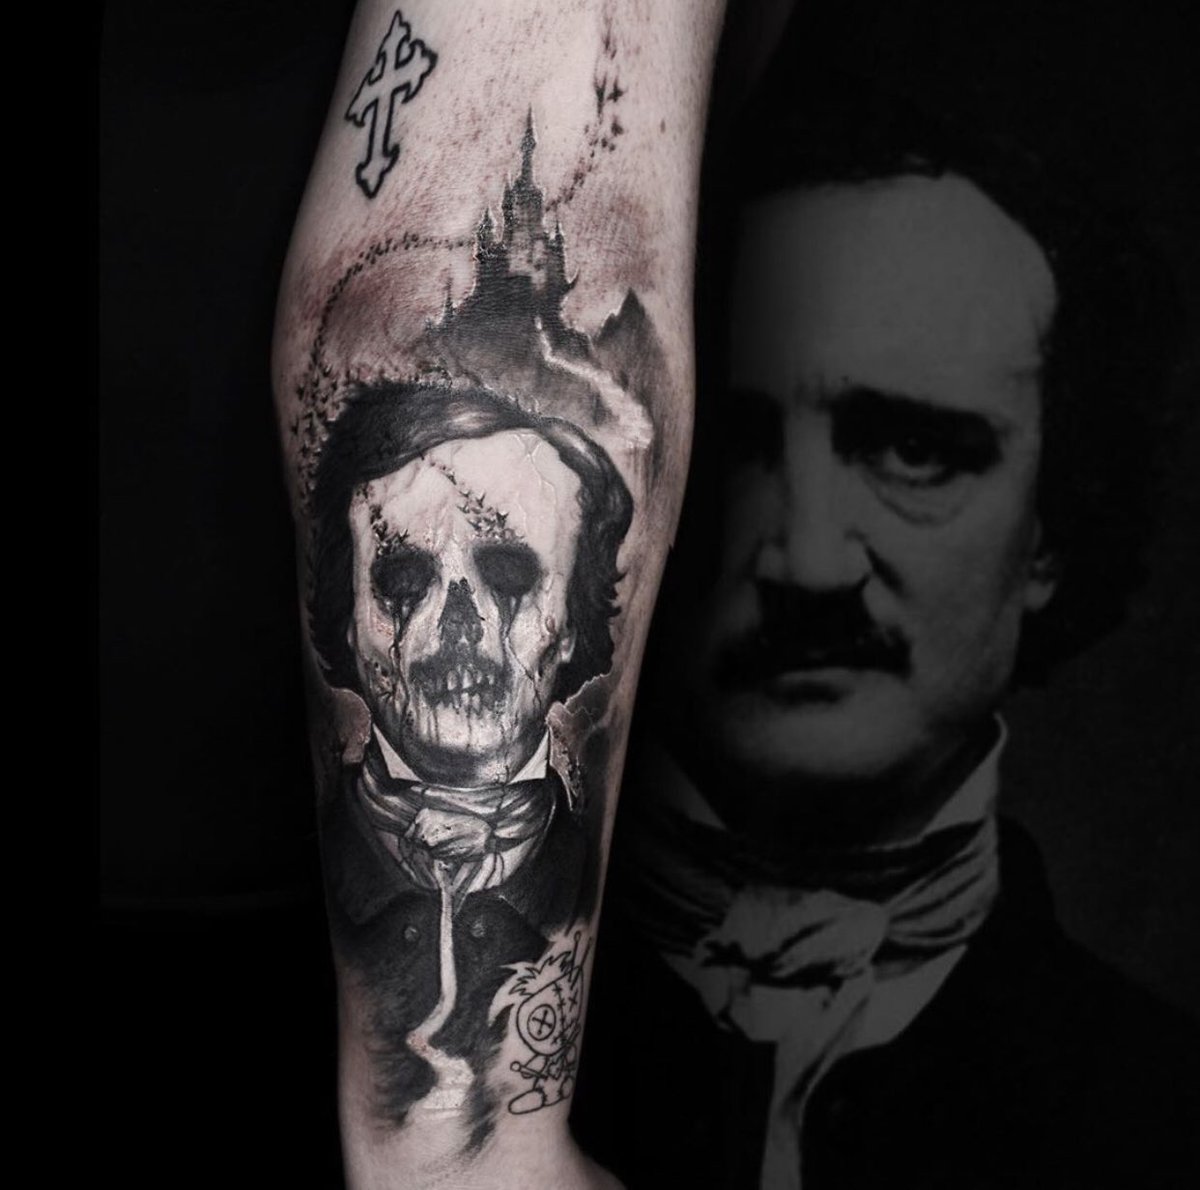 Edgar Allan Poe Poem Tattoo On Full Back